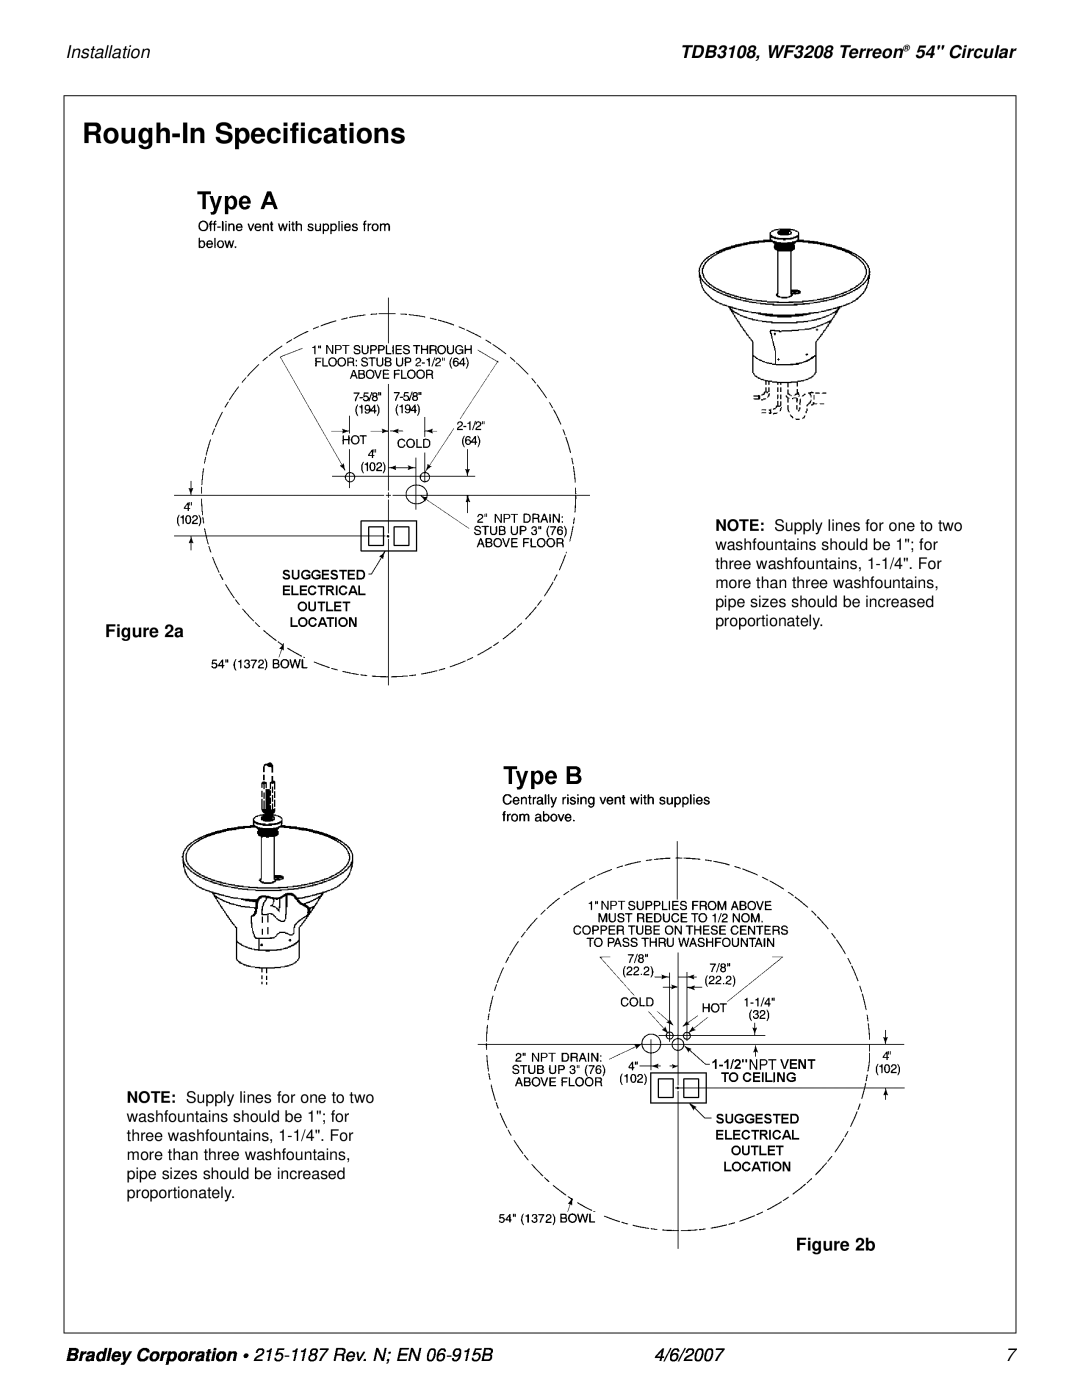 Bradley Smoker installation manual Rough-In Specifications, Installation, TDB3108, WF3208 Terreon 54 Circular, 4/6/2007 